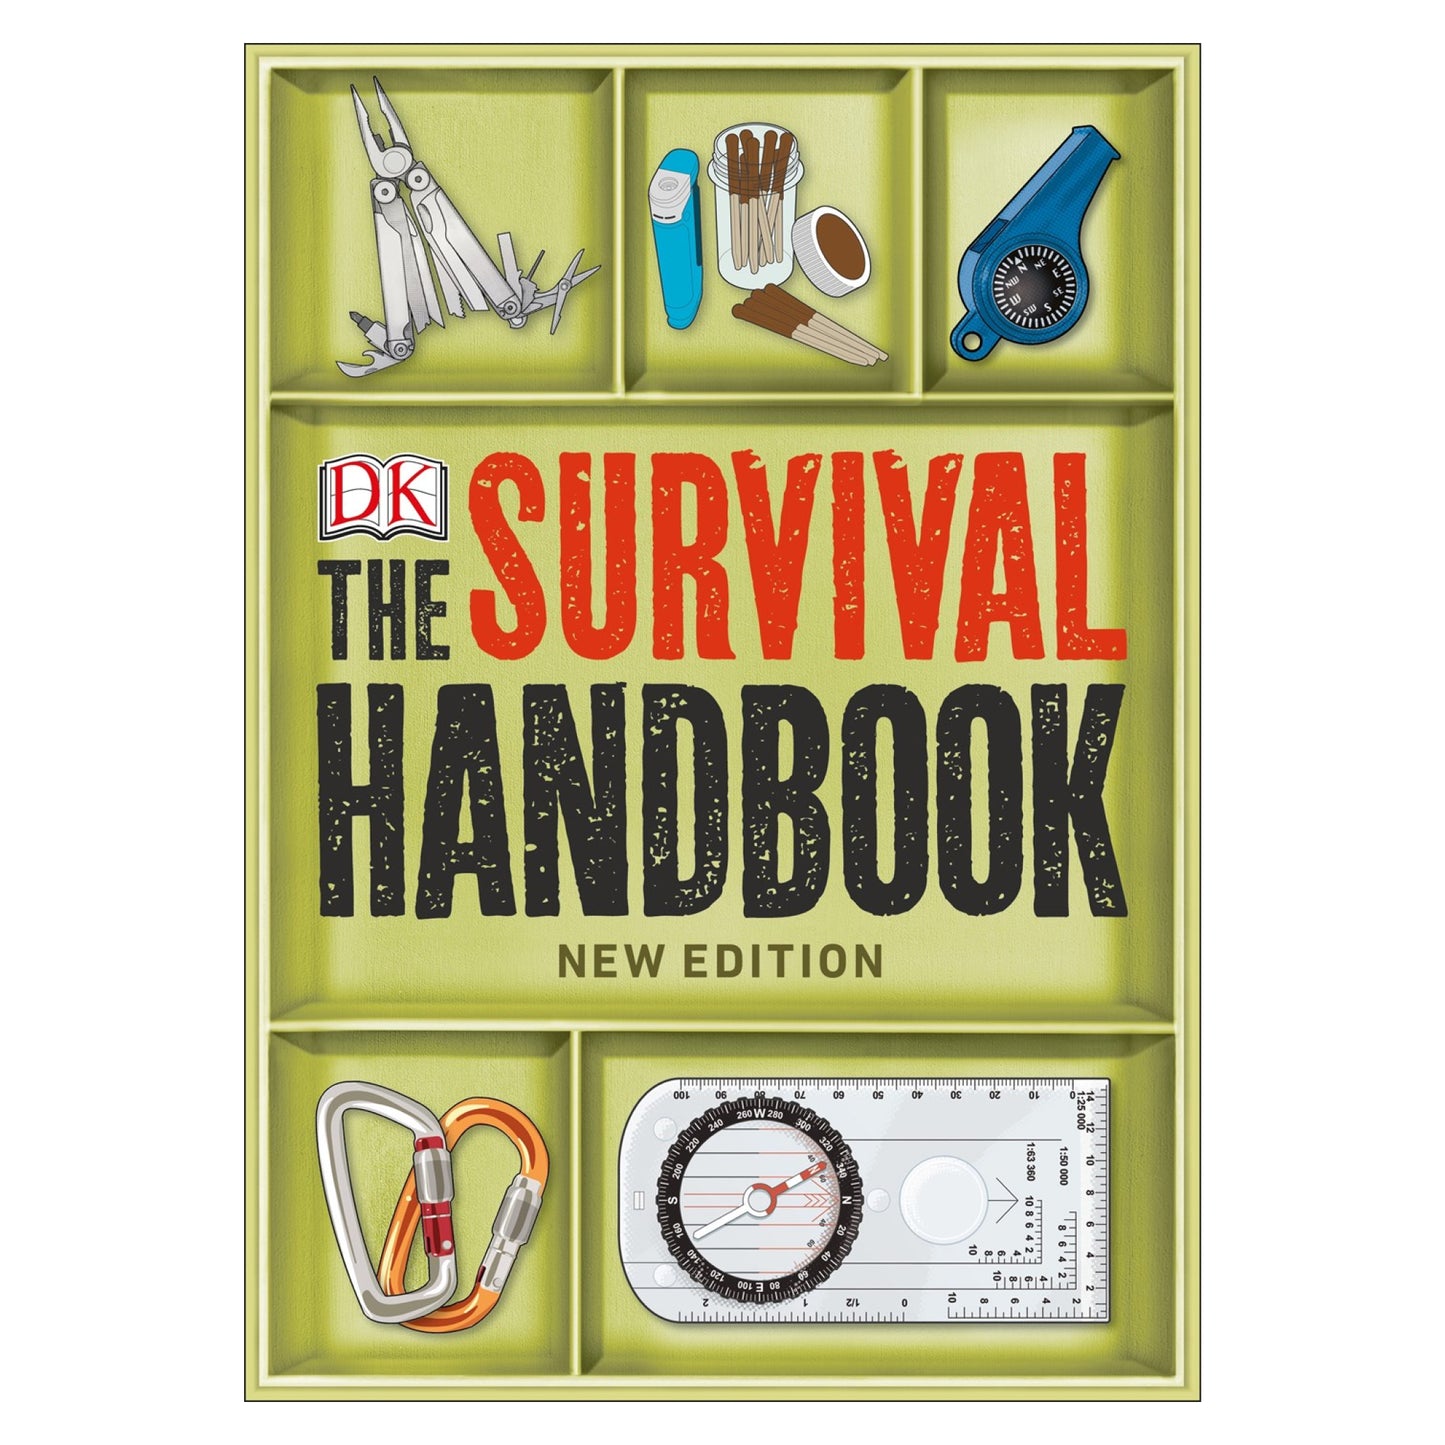 The Survival Handbook: New Edition